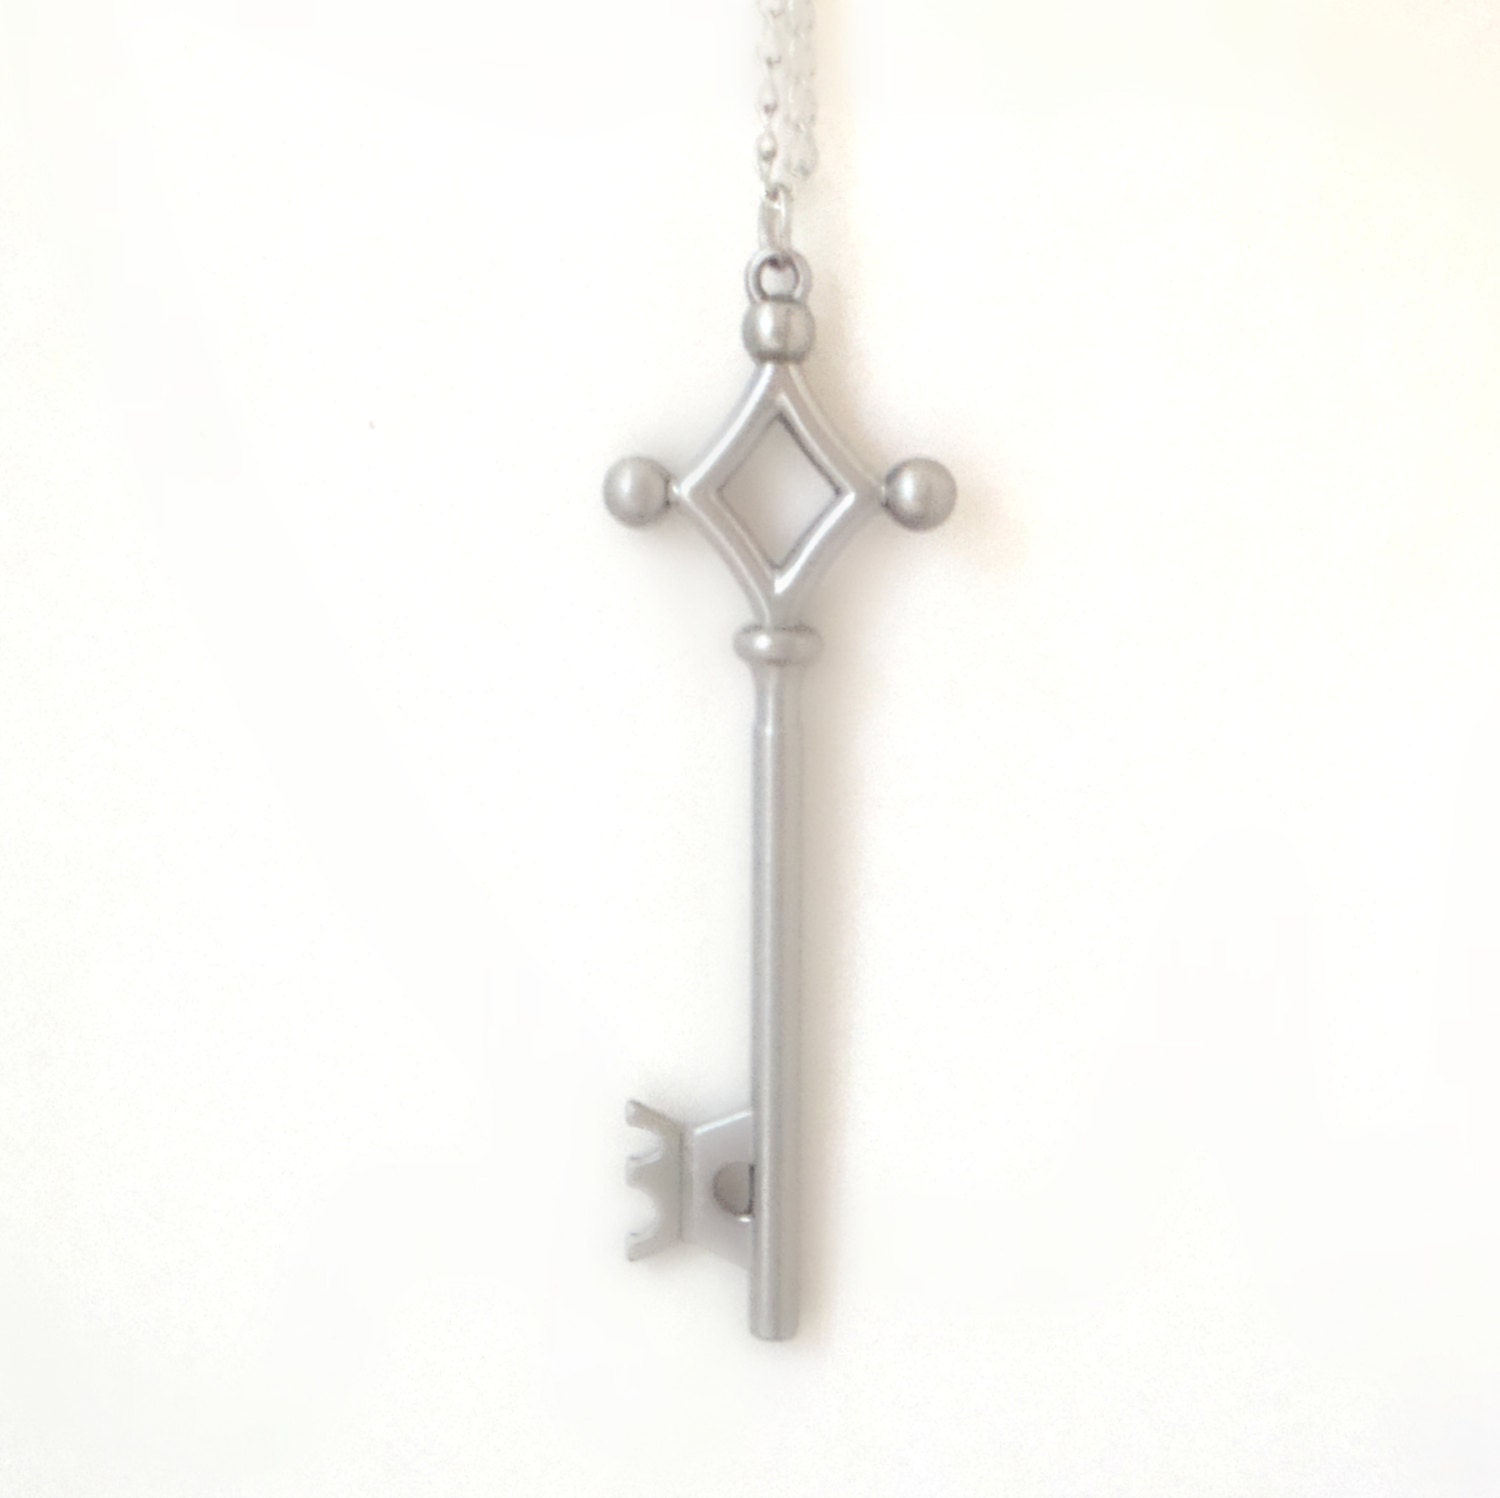 Eren's Key Necklace